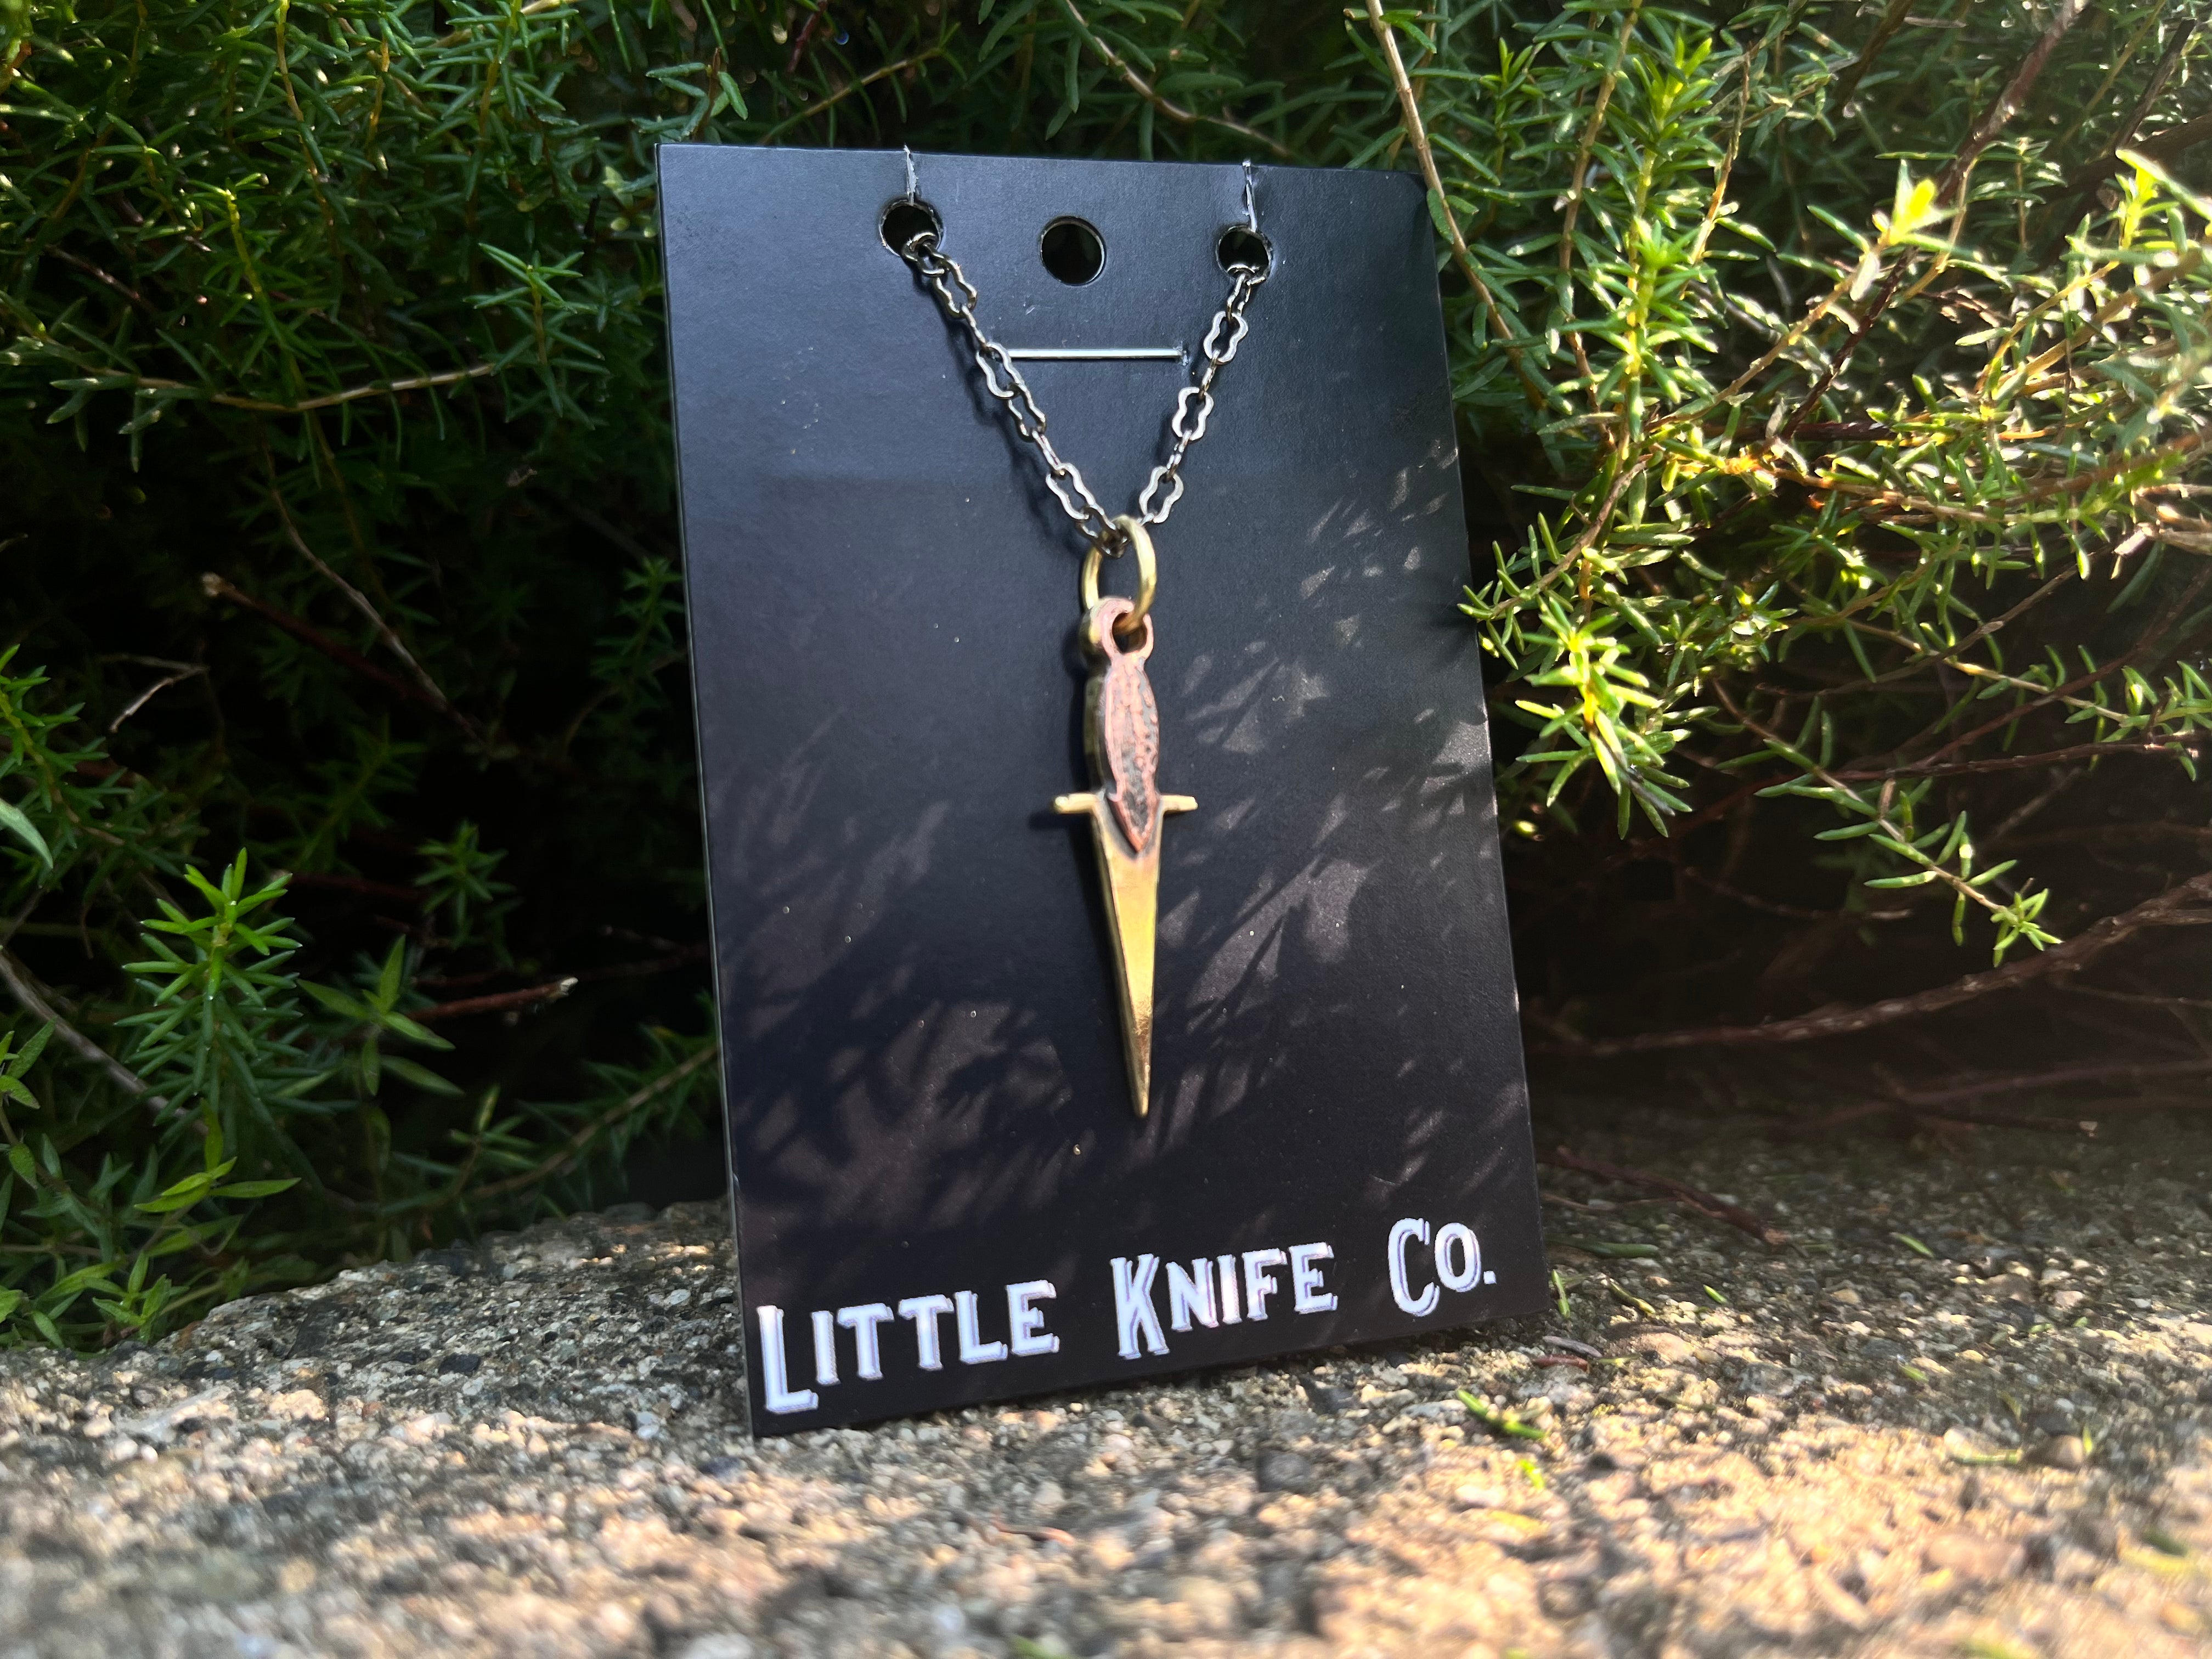 Little knife company